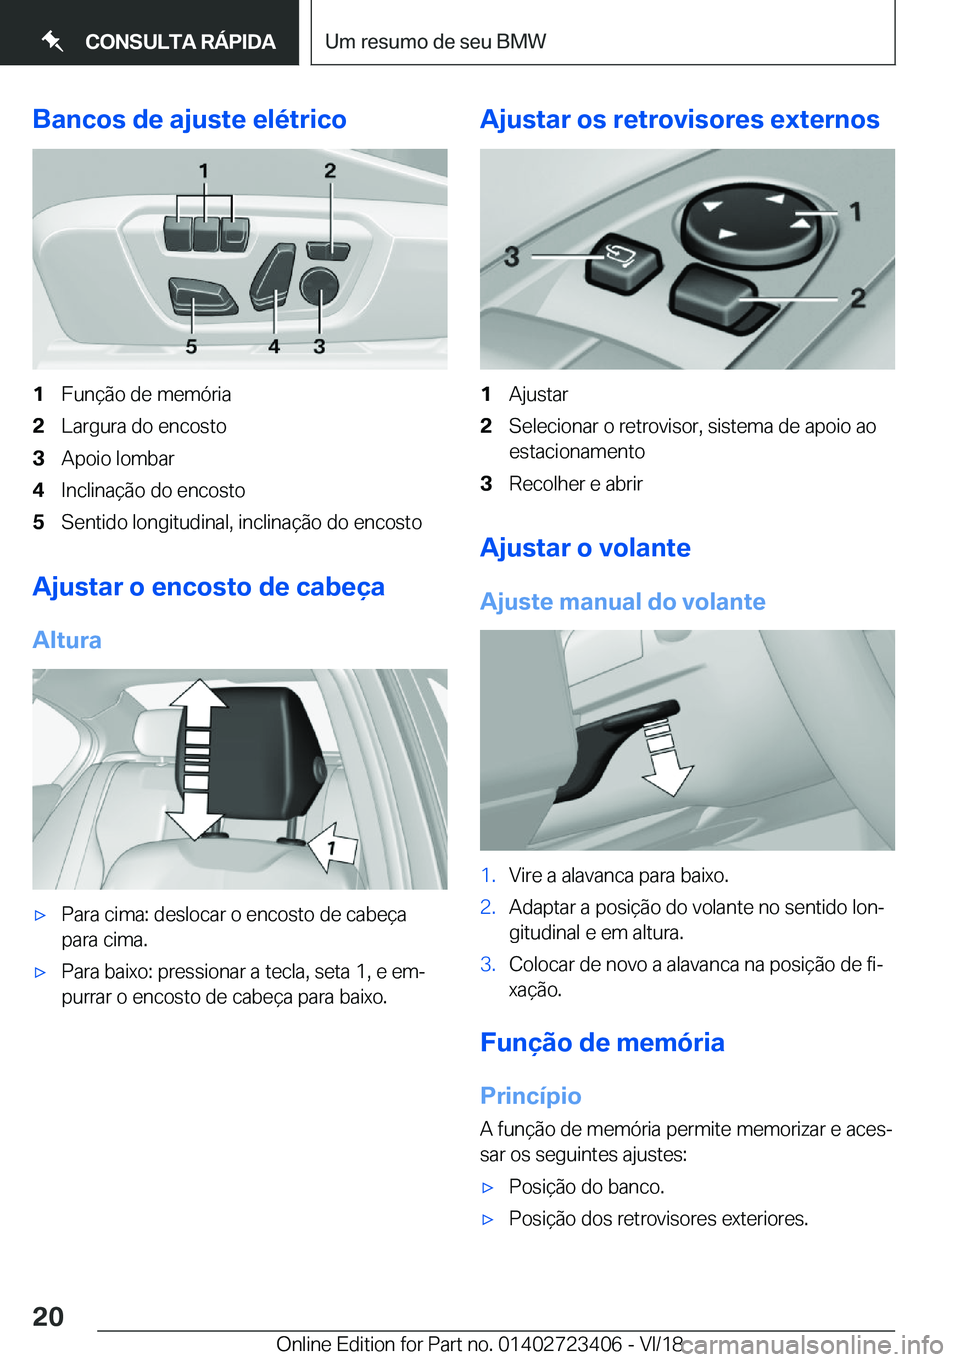 BMW 2 SERIES COUPE 2019  Manual do condutor (in Portuguese) �B�a�n�c�o�s��d�e��a�j�u�s�t�e��e�l�é�t�r�i�c�o�1�F�u�n�